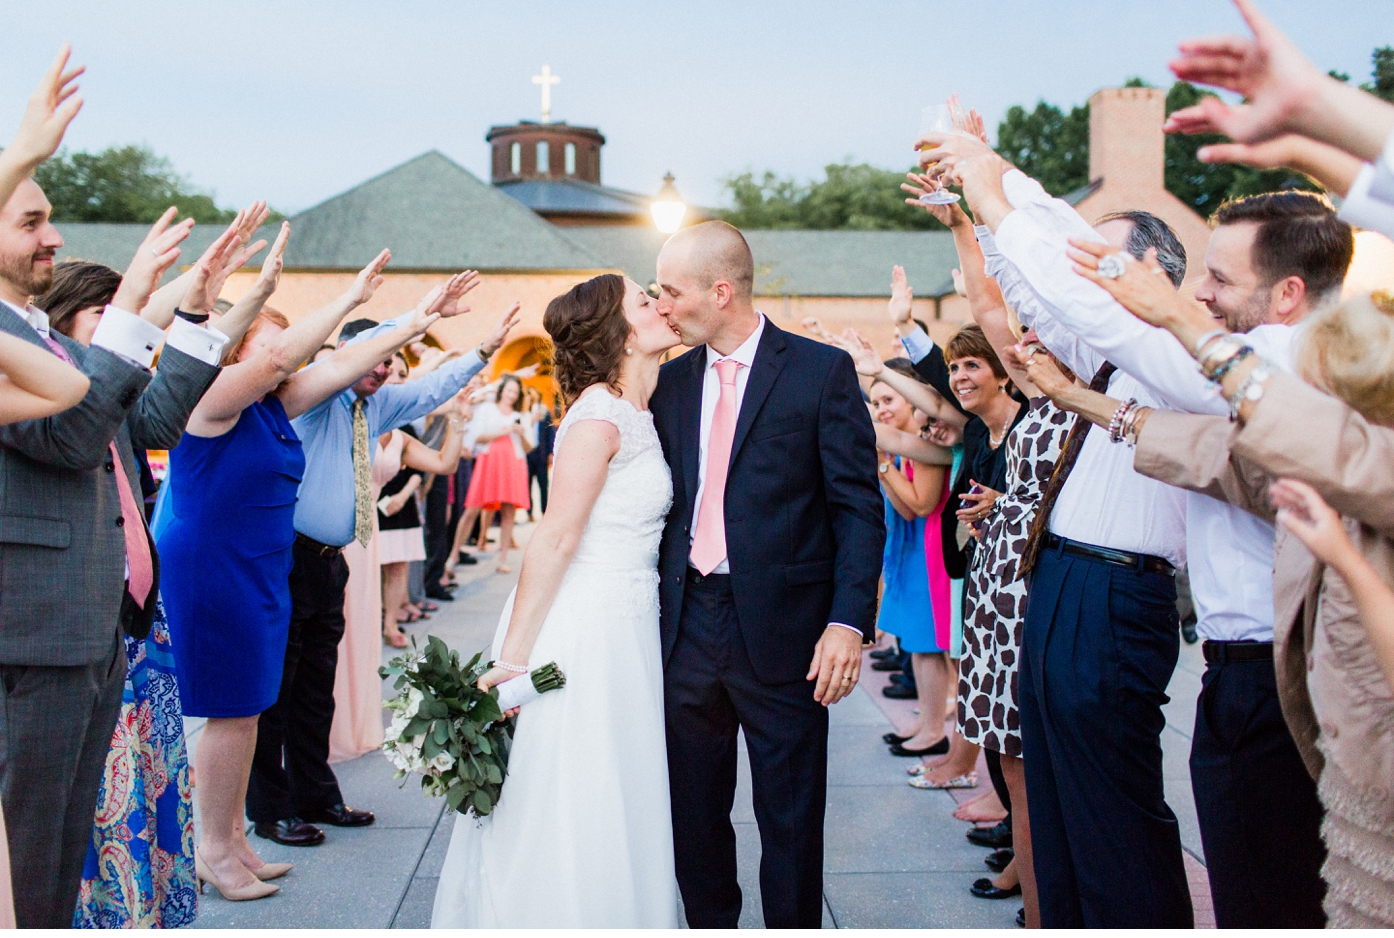 St. Bede's Wedding in Williamsburg, VA by Alisandra Photography